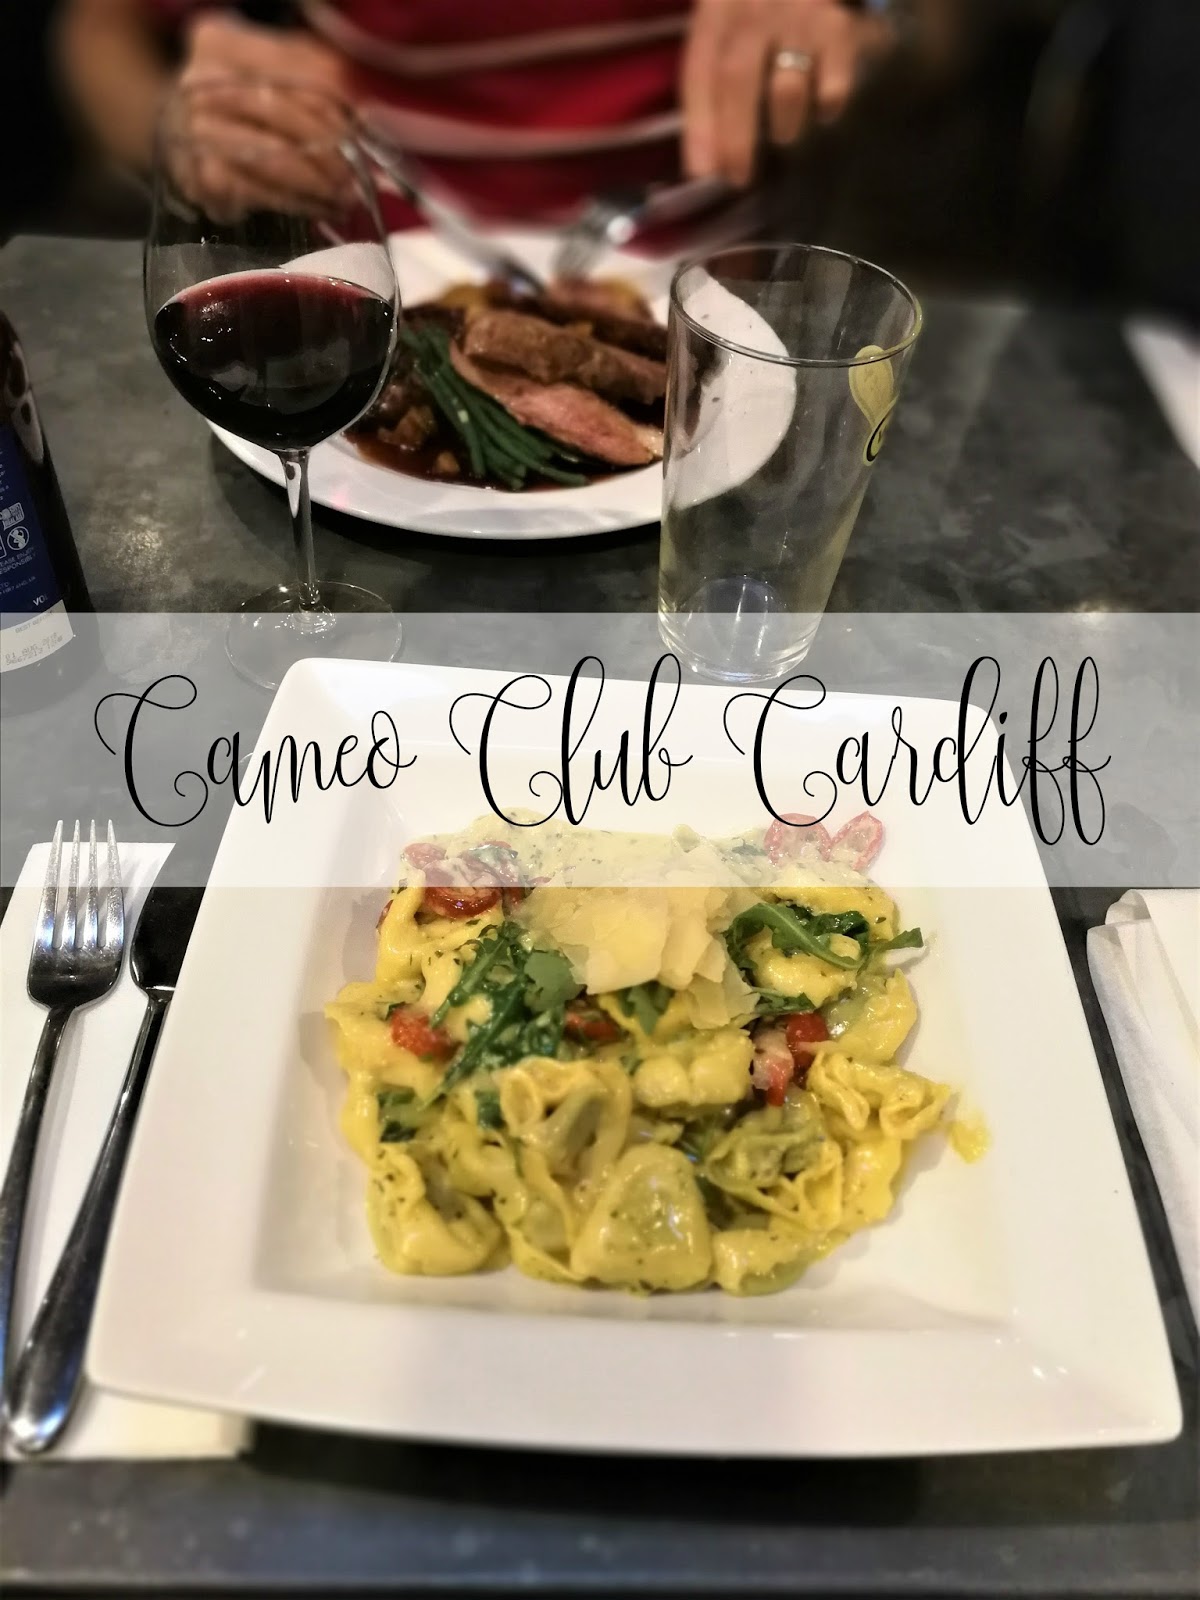 Cameo Club Cardiff